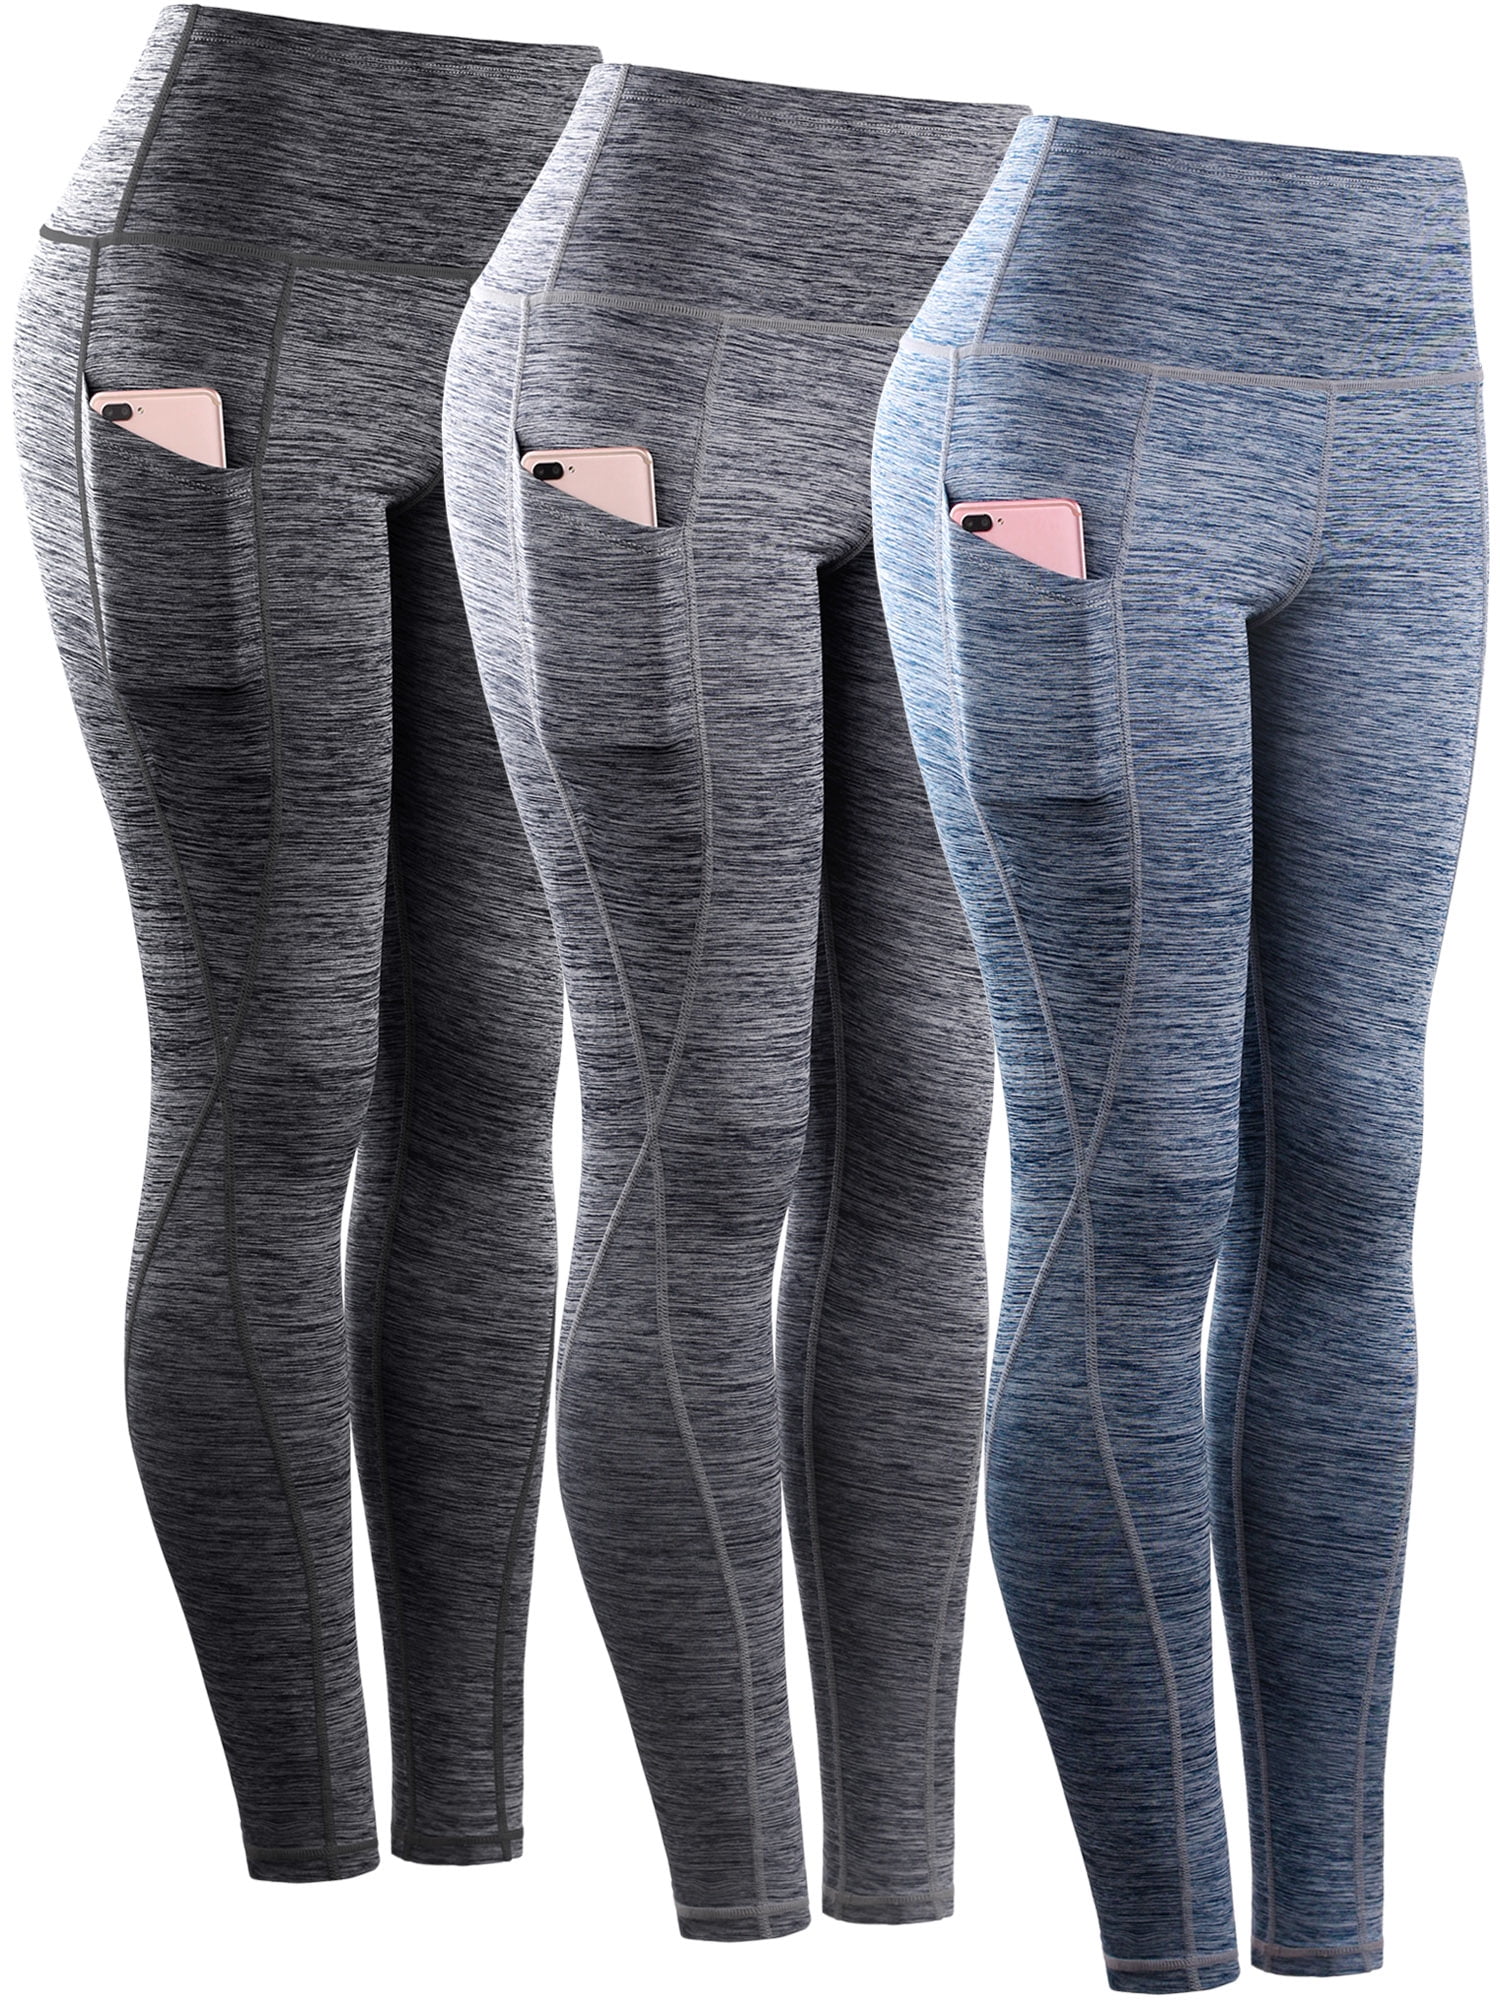 NELEUS Women's High Waist Yoga Shorts Tummy Control Workout Running  Compression Shorts with Pocket, 9035 3 Pack:black/Grey/Blue, M price in UAE,  UAE